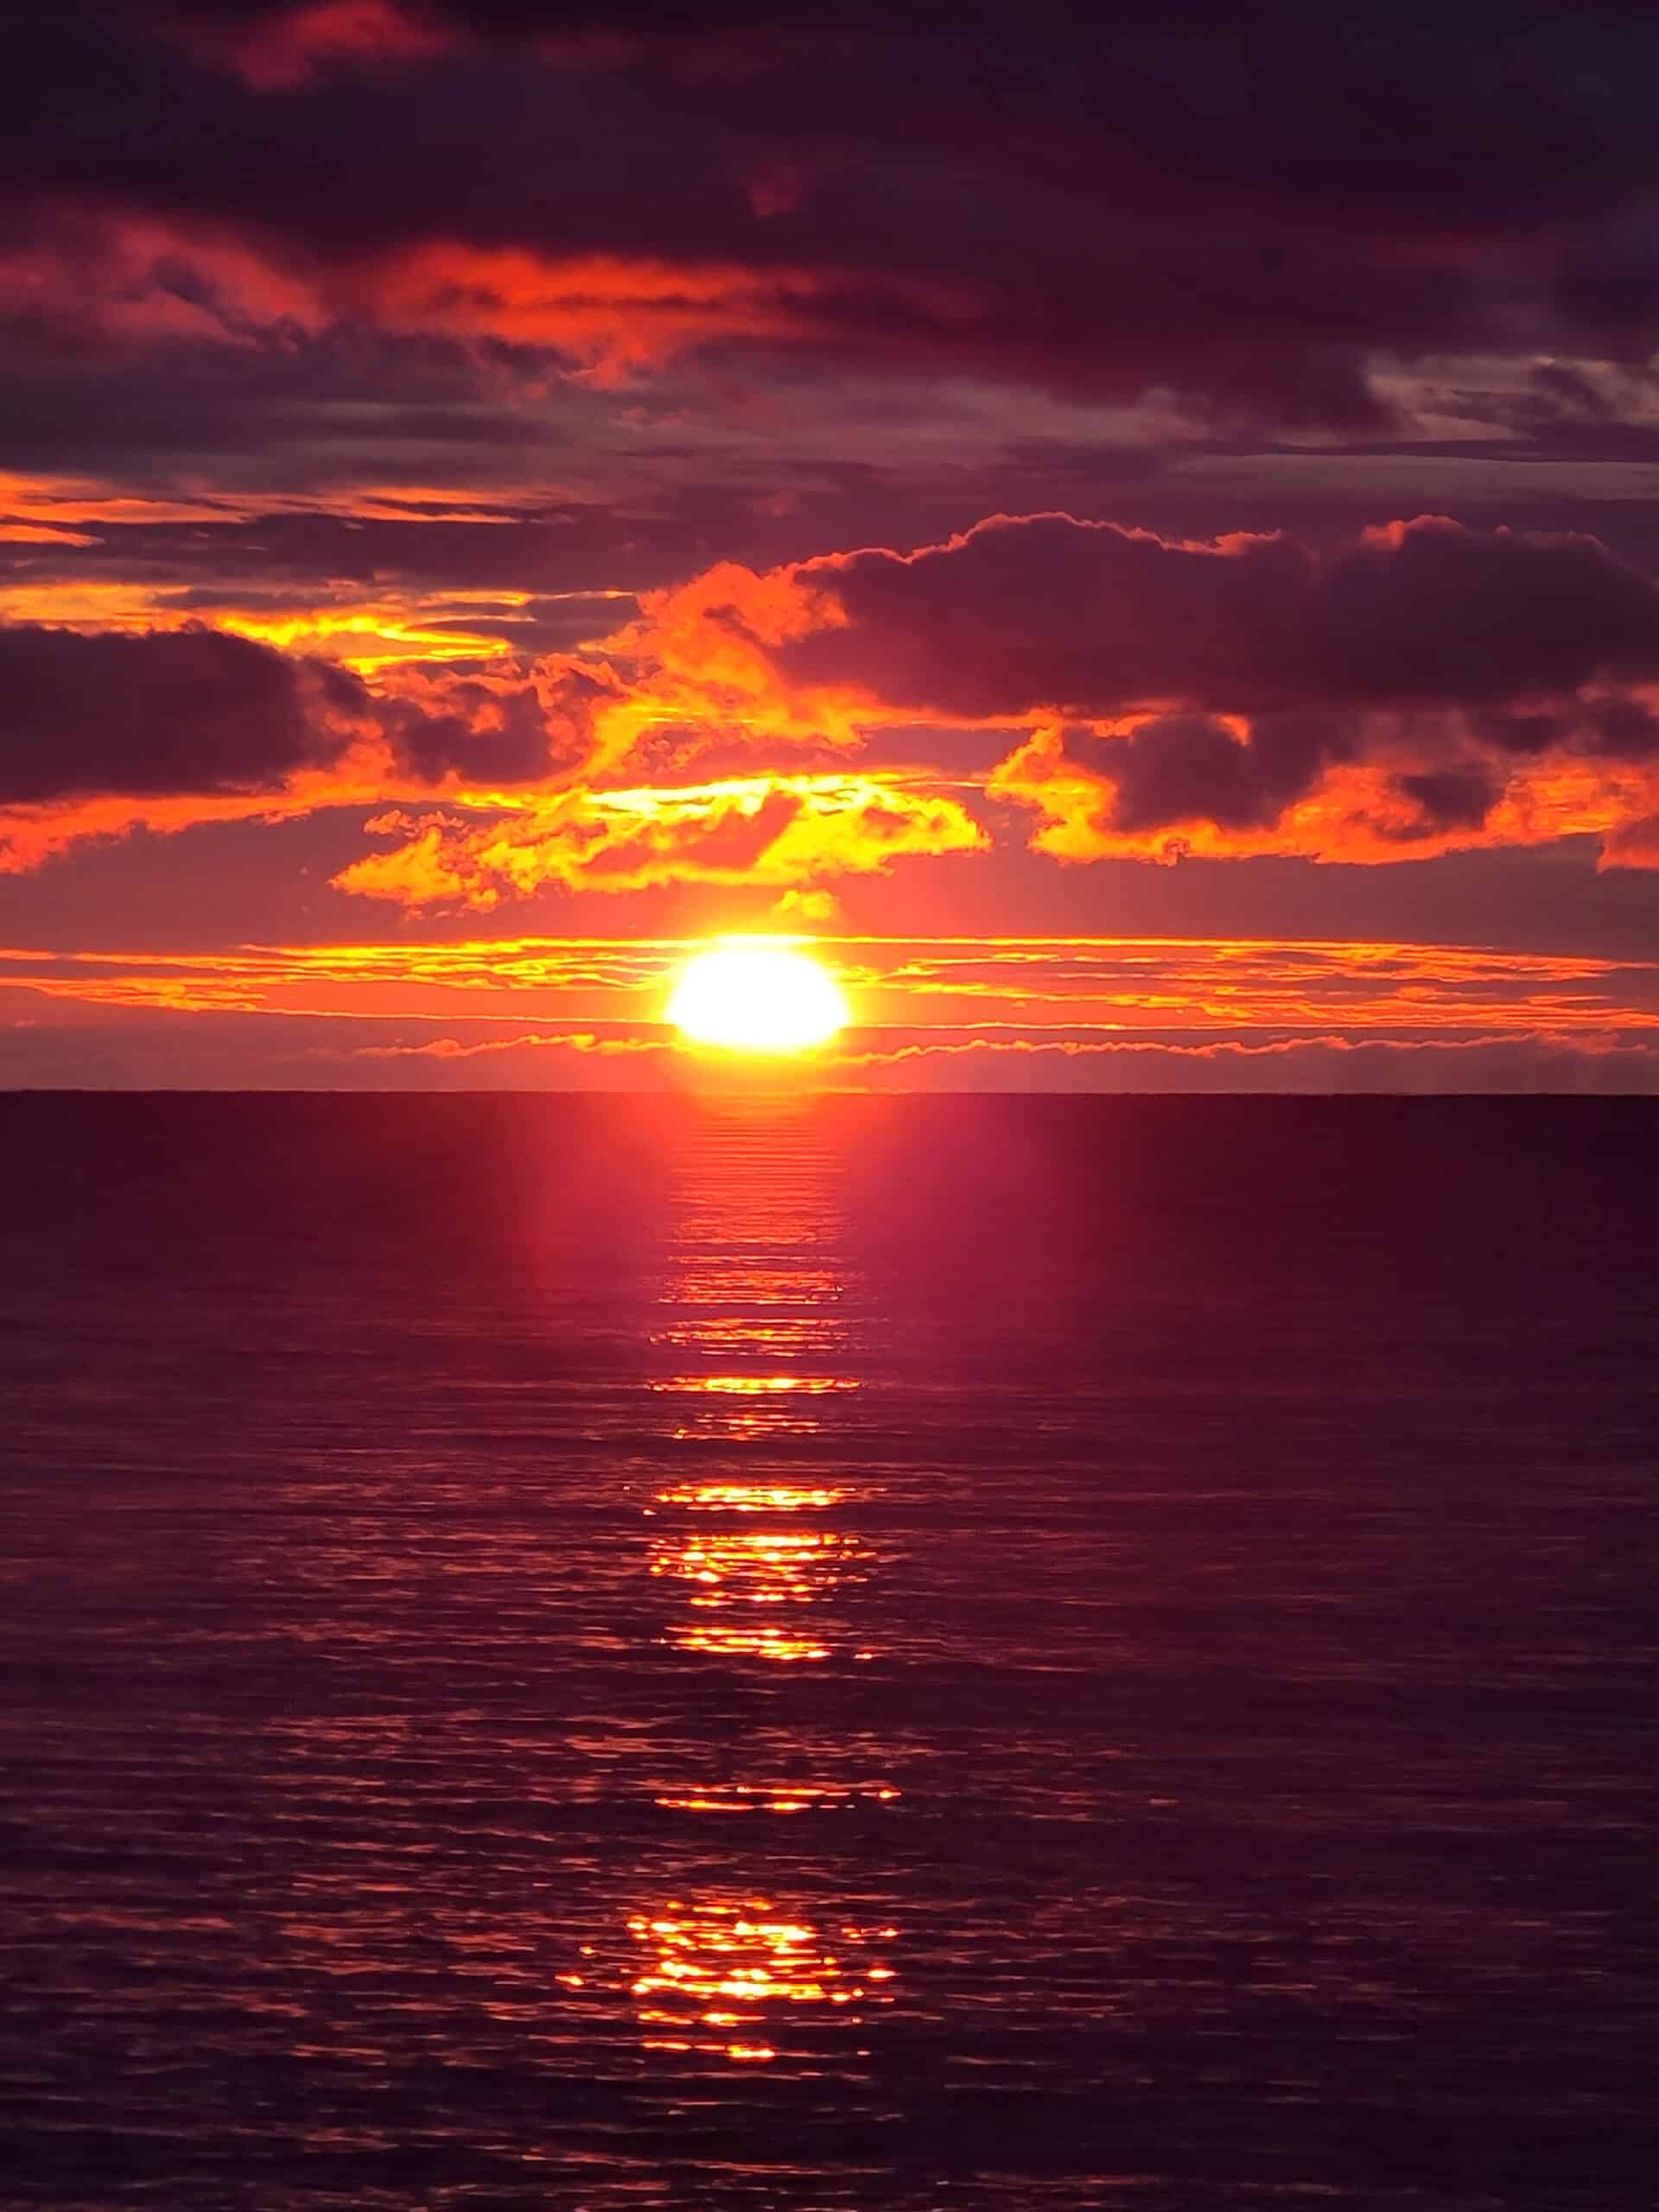 Brilliant sunset over Lake Superior.